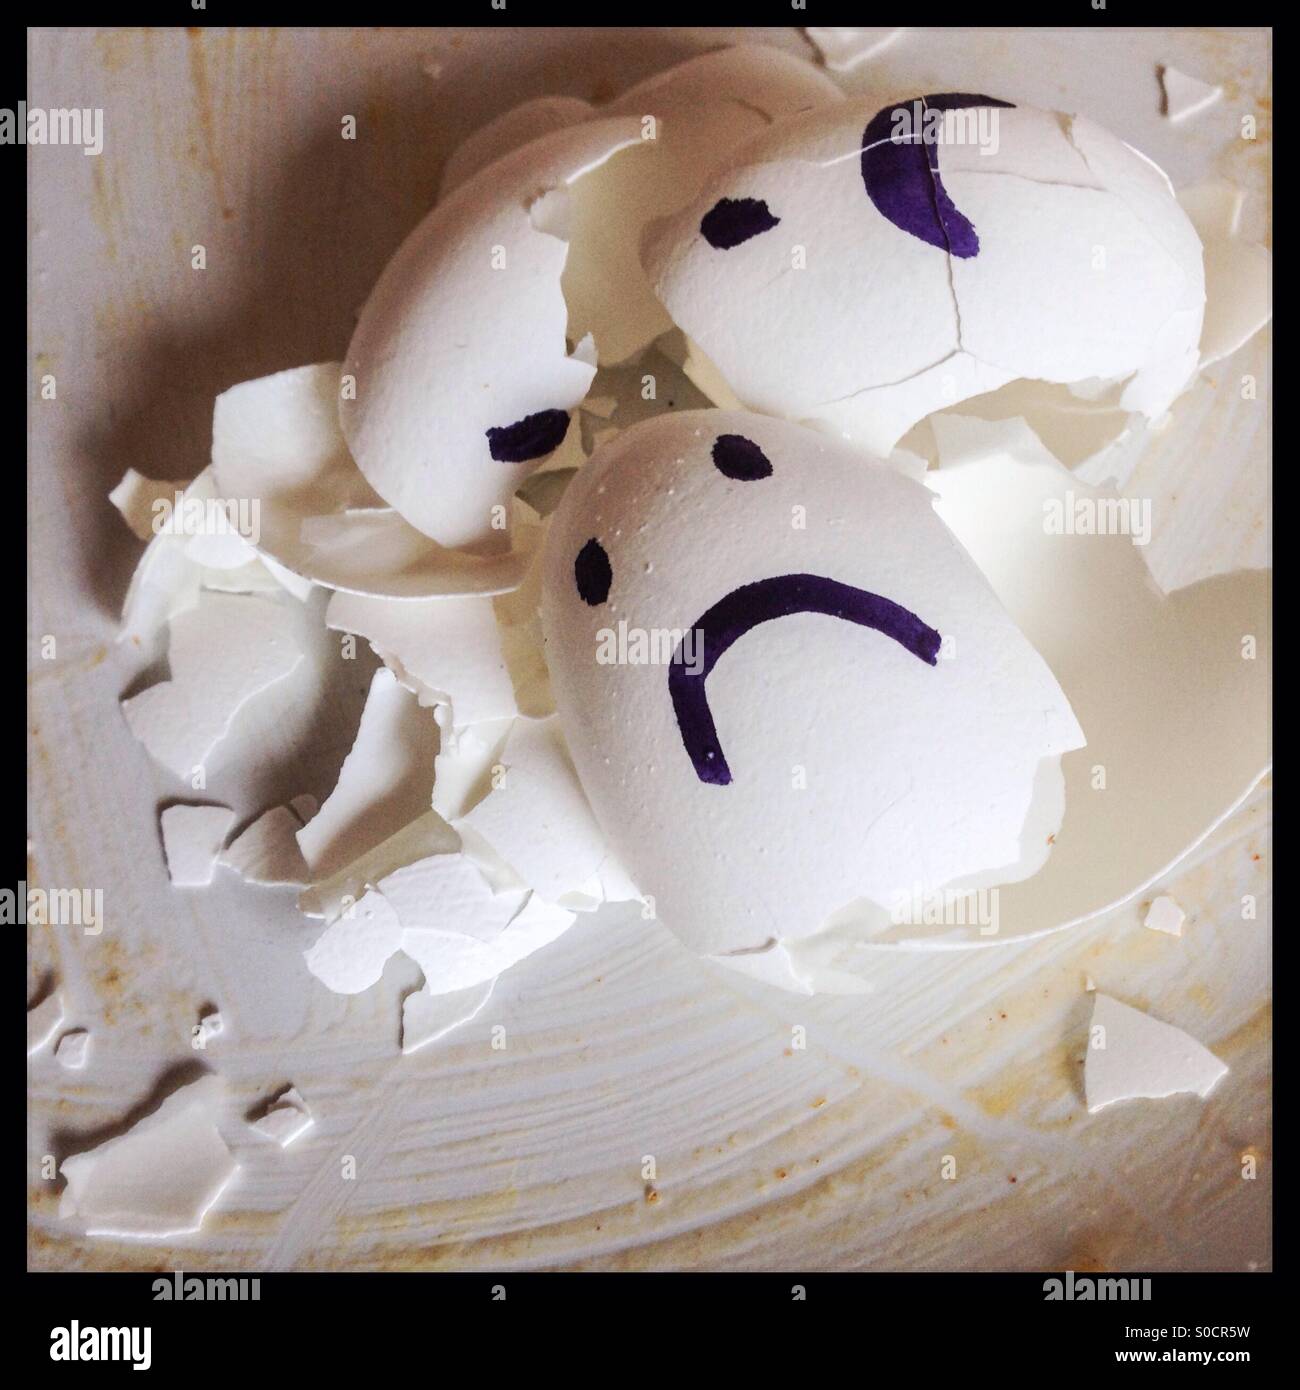 Broken Eggshells with sad faces Stock Photo